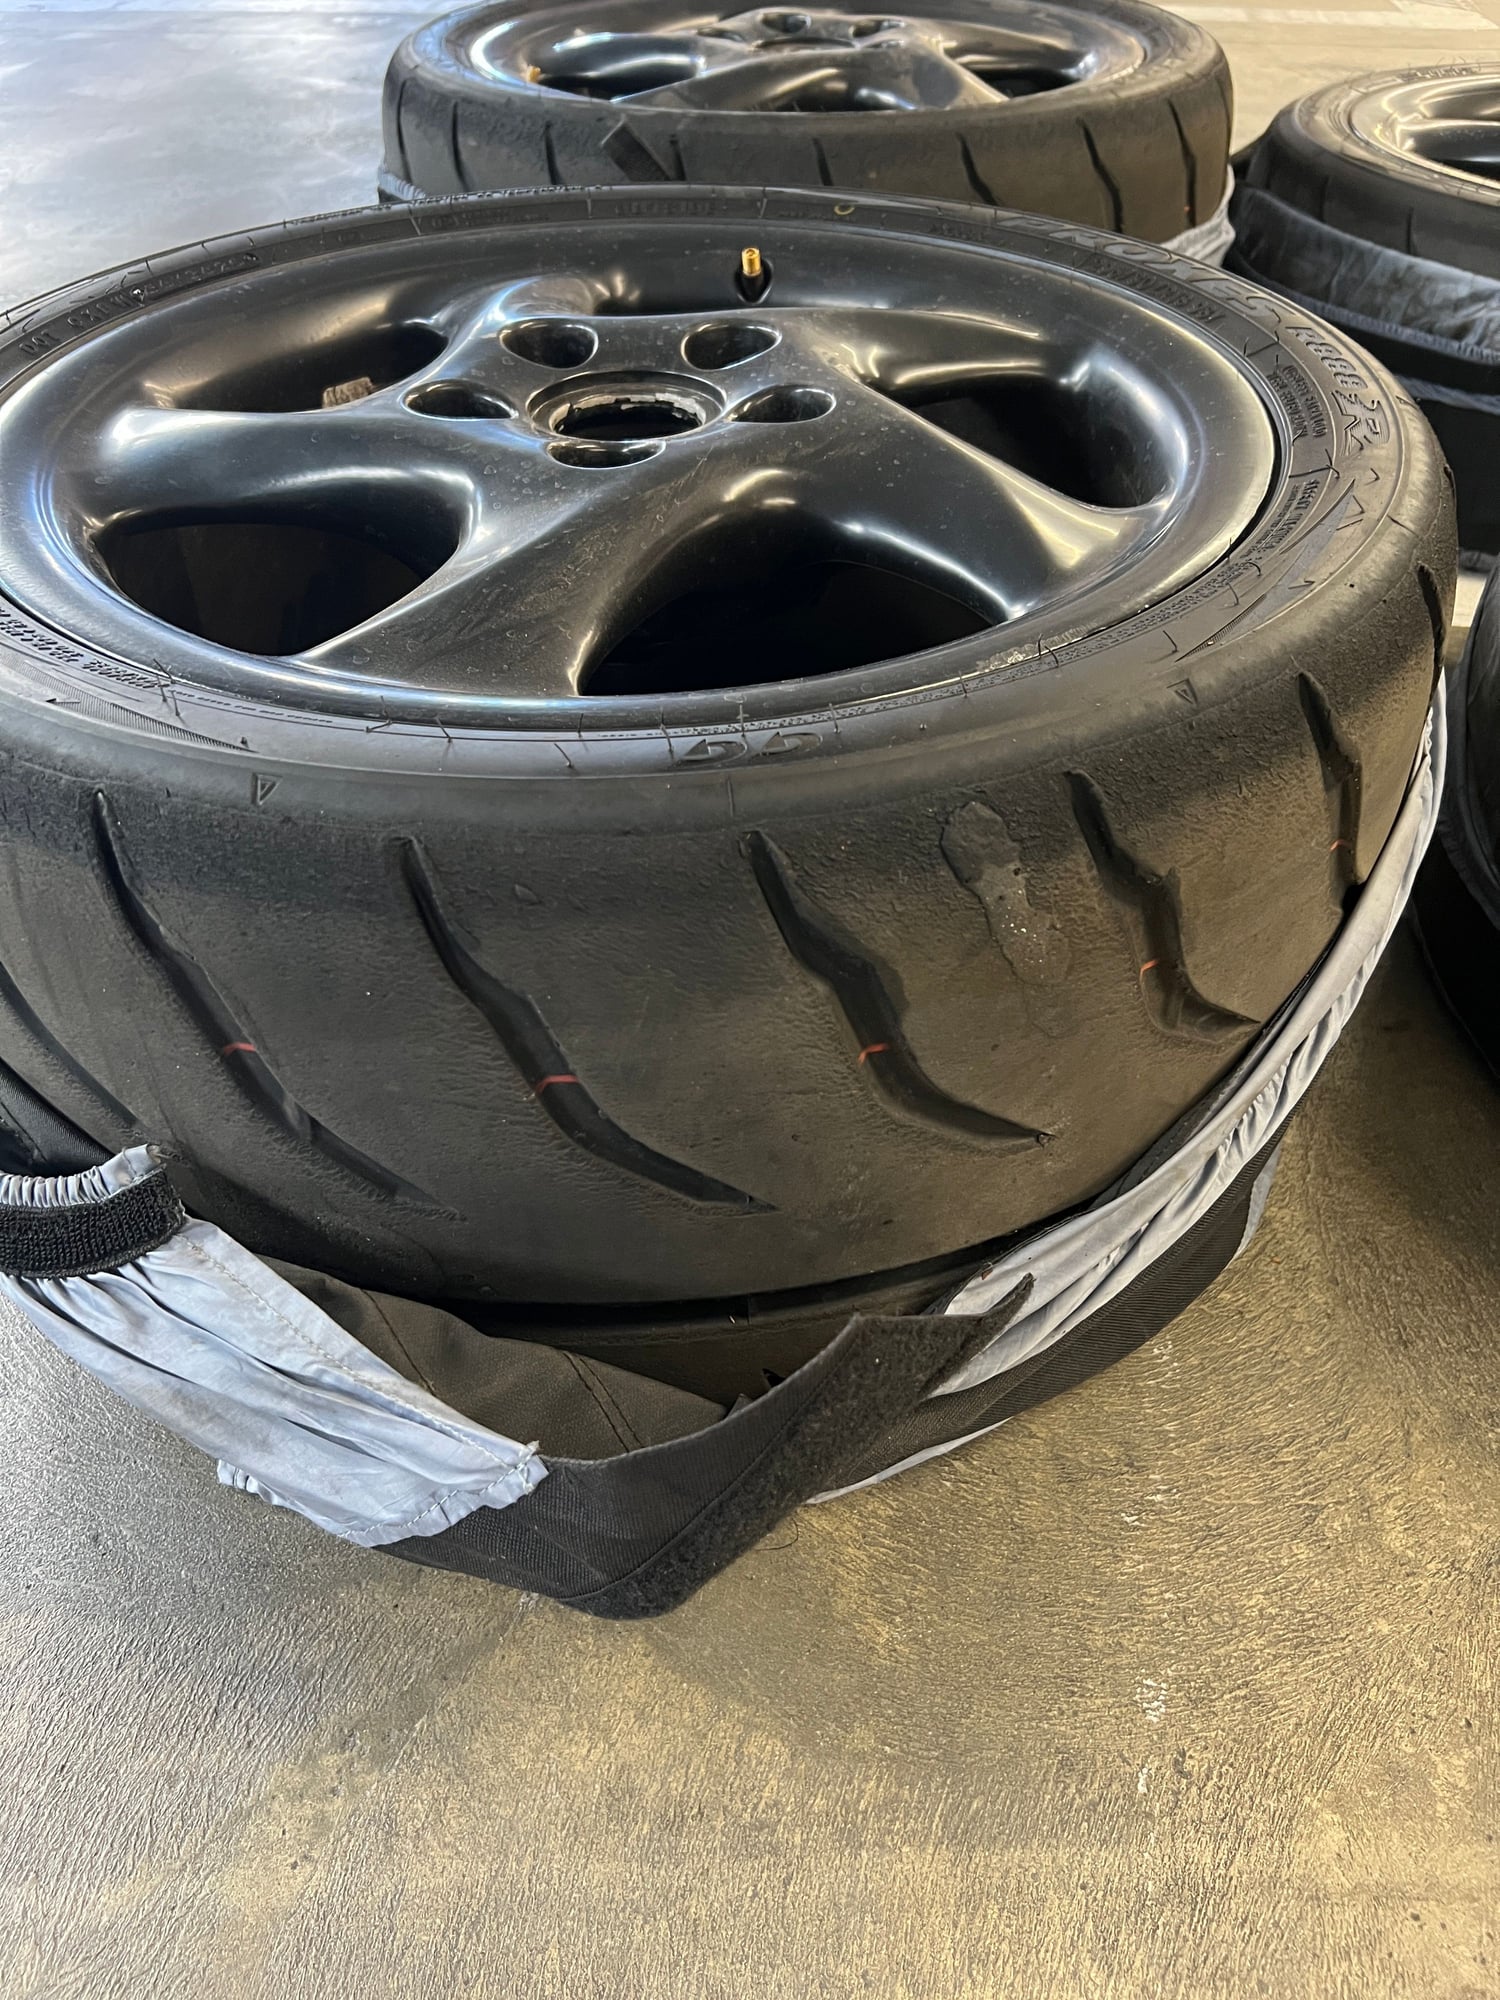 Wheels and Tires/Axles - Black Rims with Tires - Used - 2001 Porsche 911 - El Segundo, CA 90245, United States